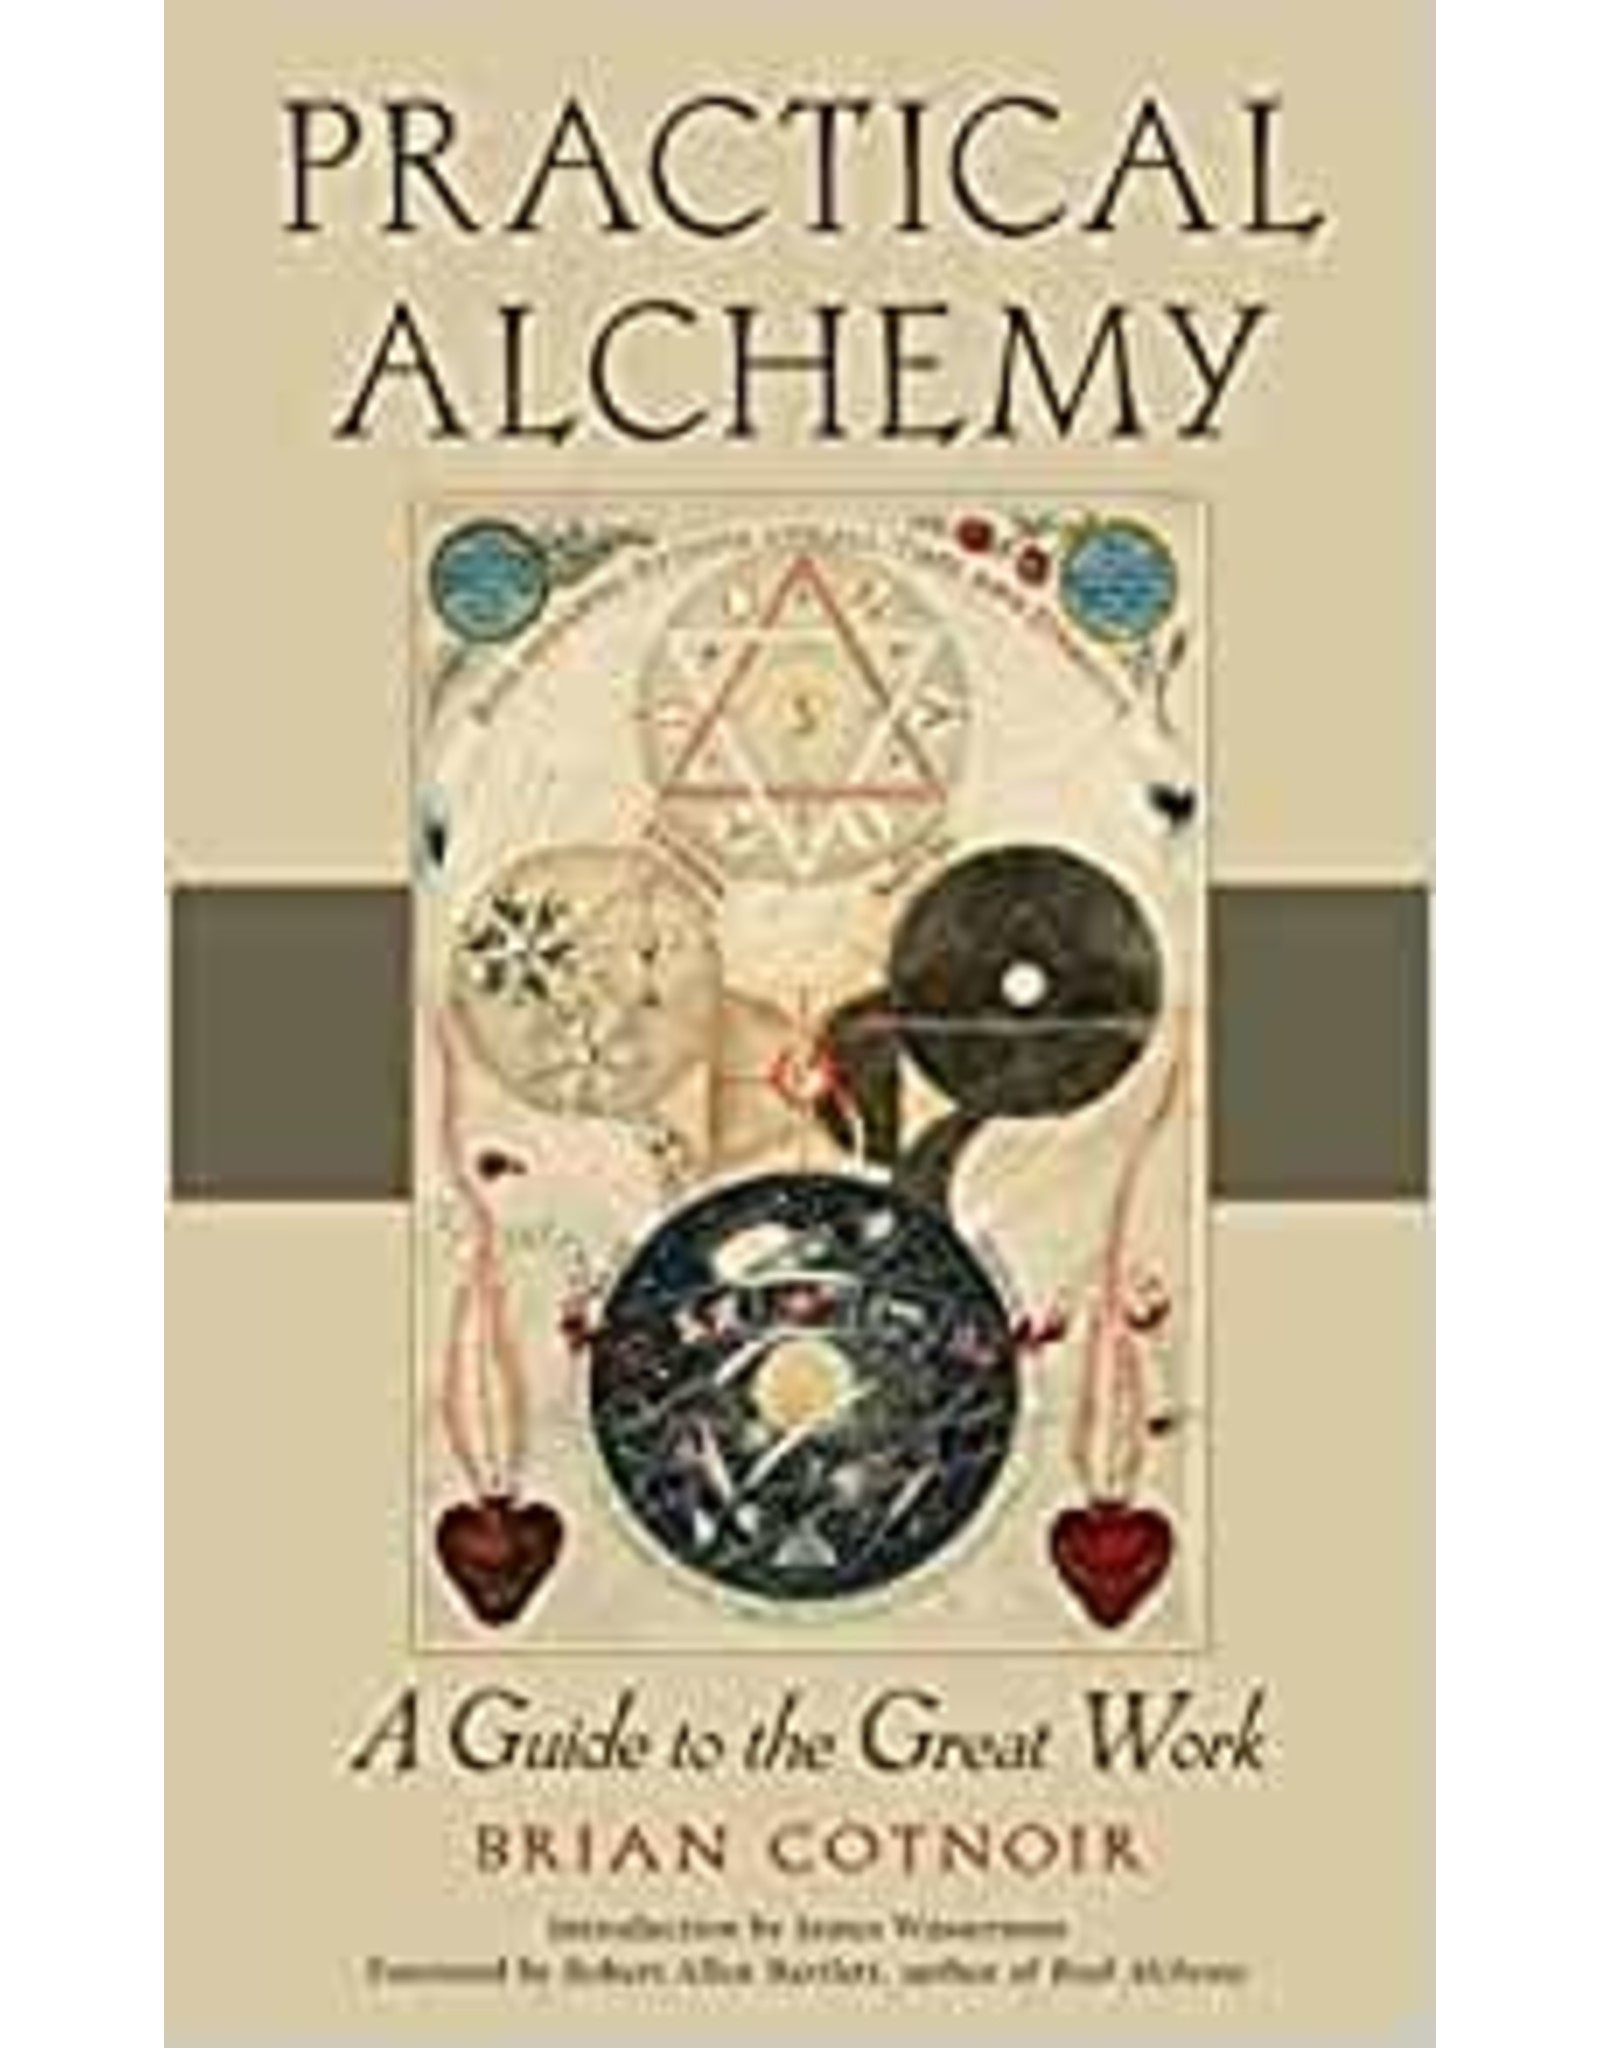 Practical Alchemy